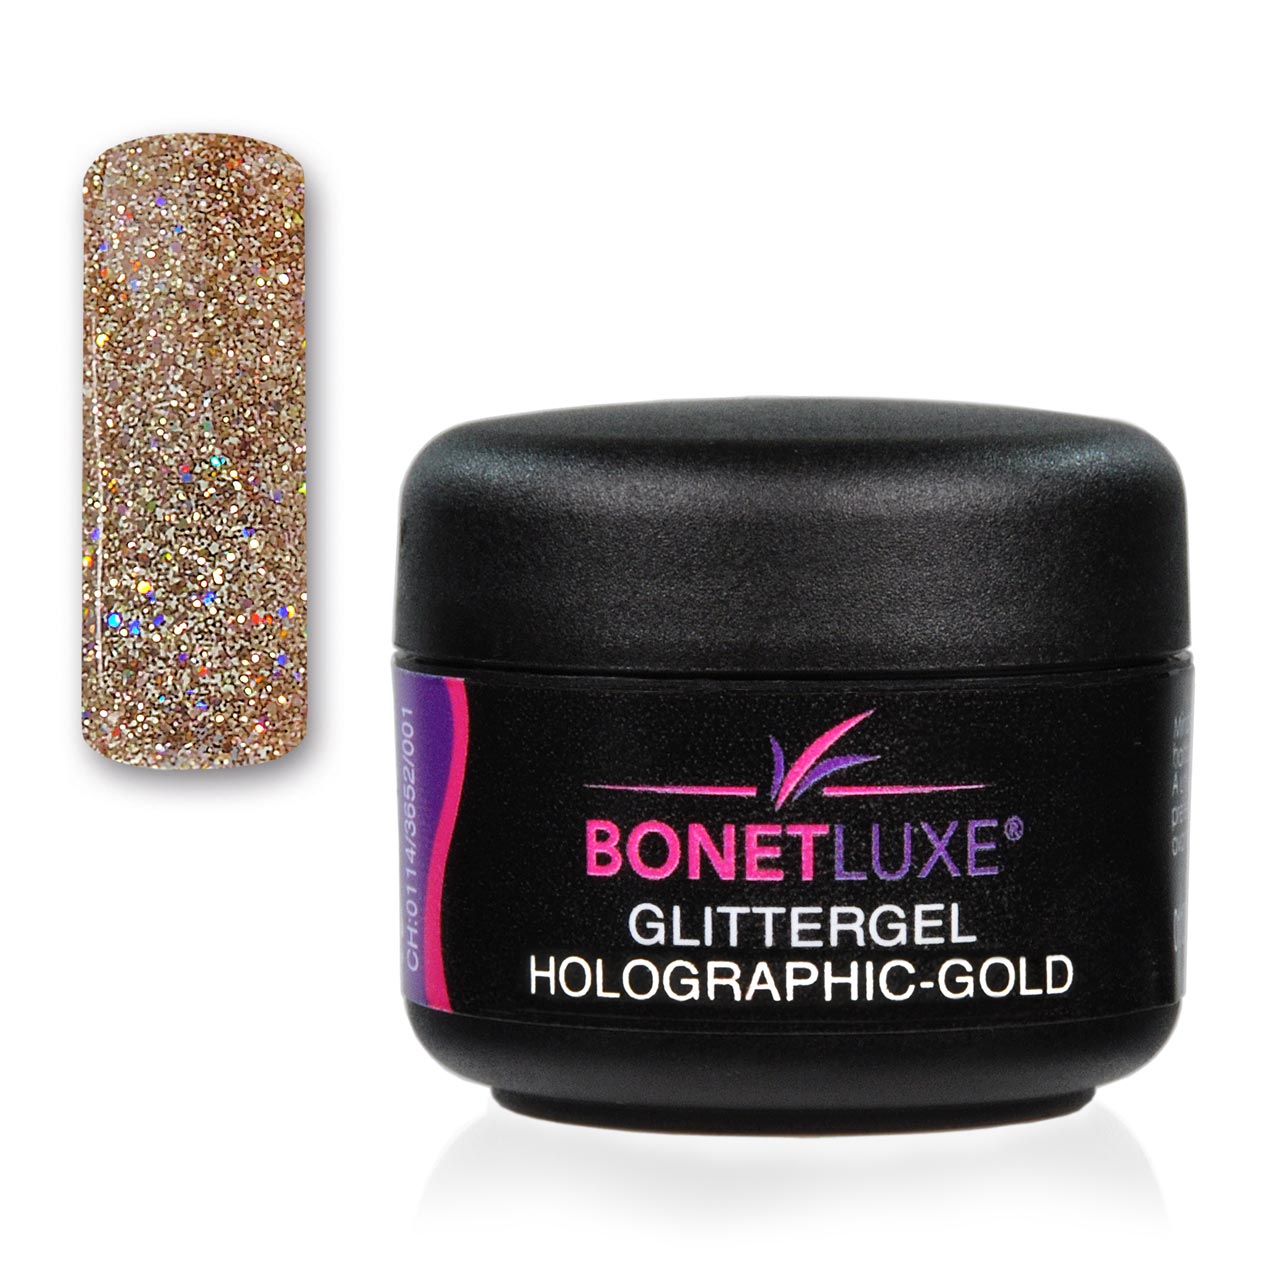 Bonetluxe Glittergel Holographic-Gold